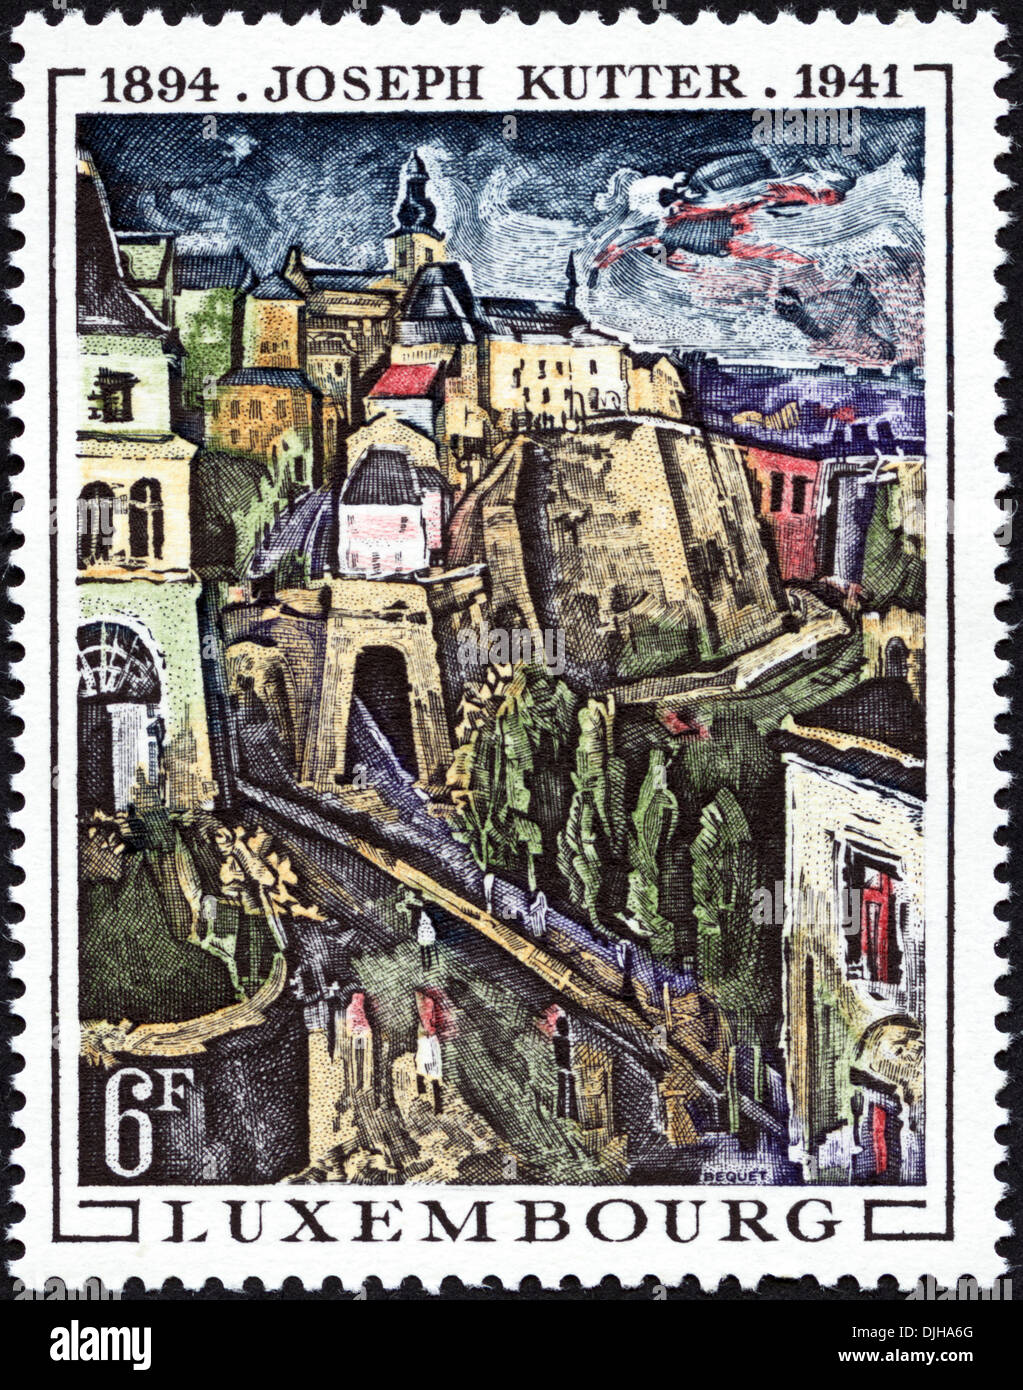 Francobolli Lussemburgo 6F dotate di artista Joseph Kutter 1894 - 1941 datata 1969 Foto Stock